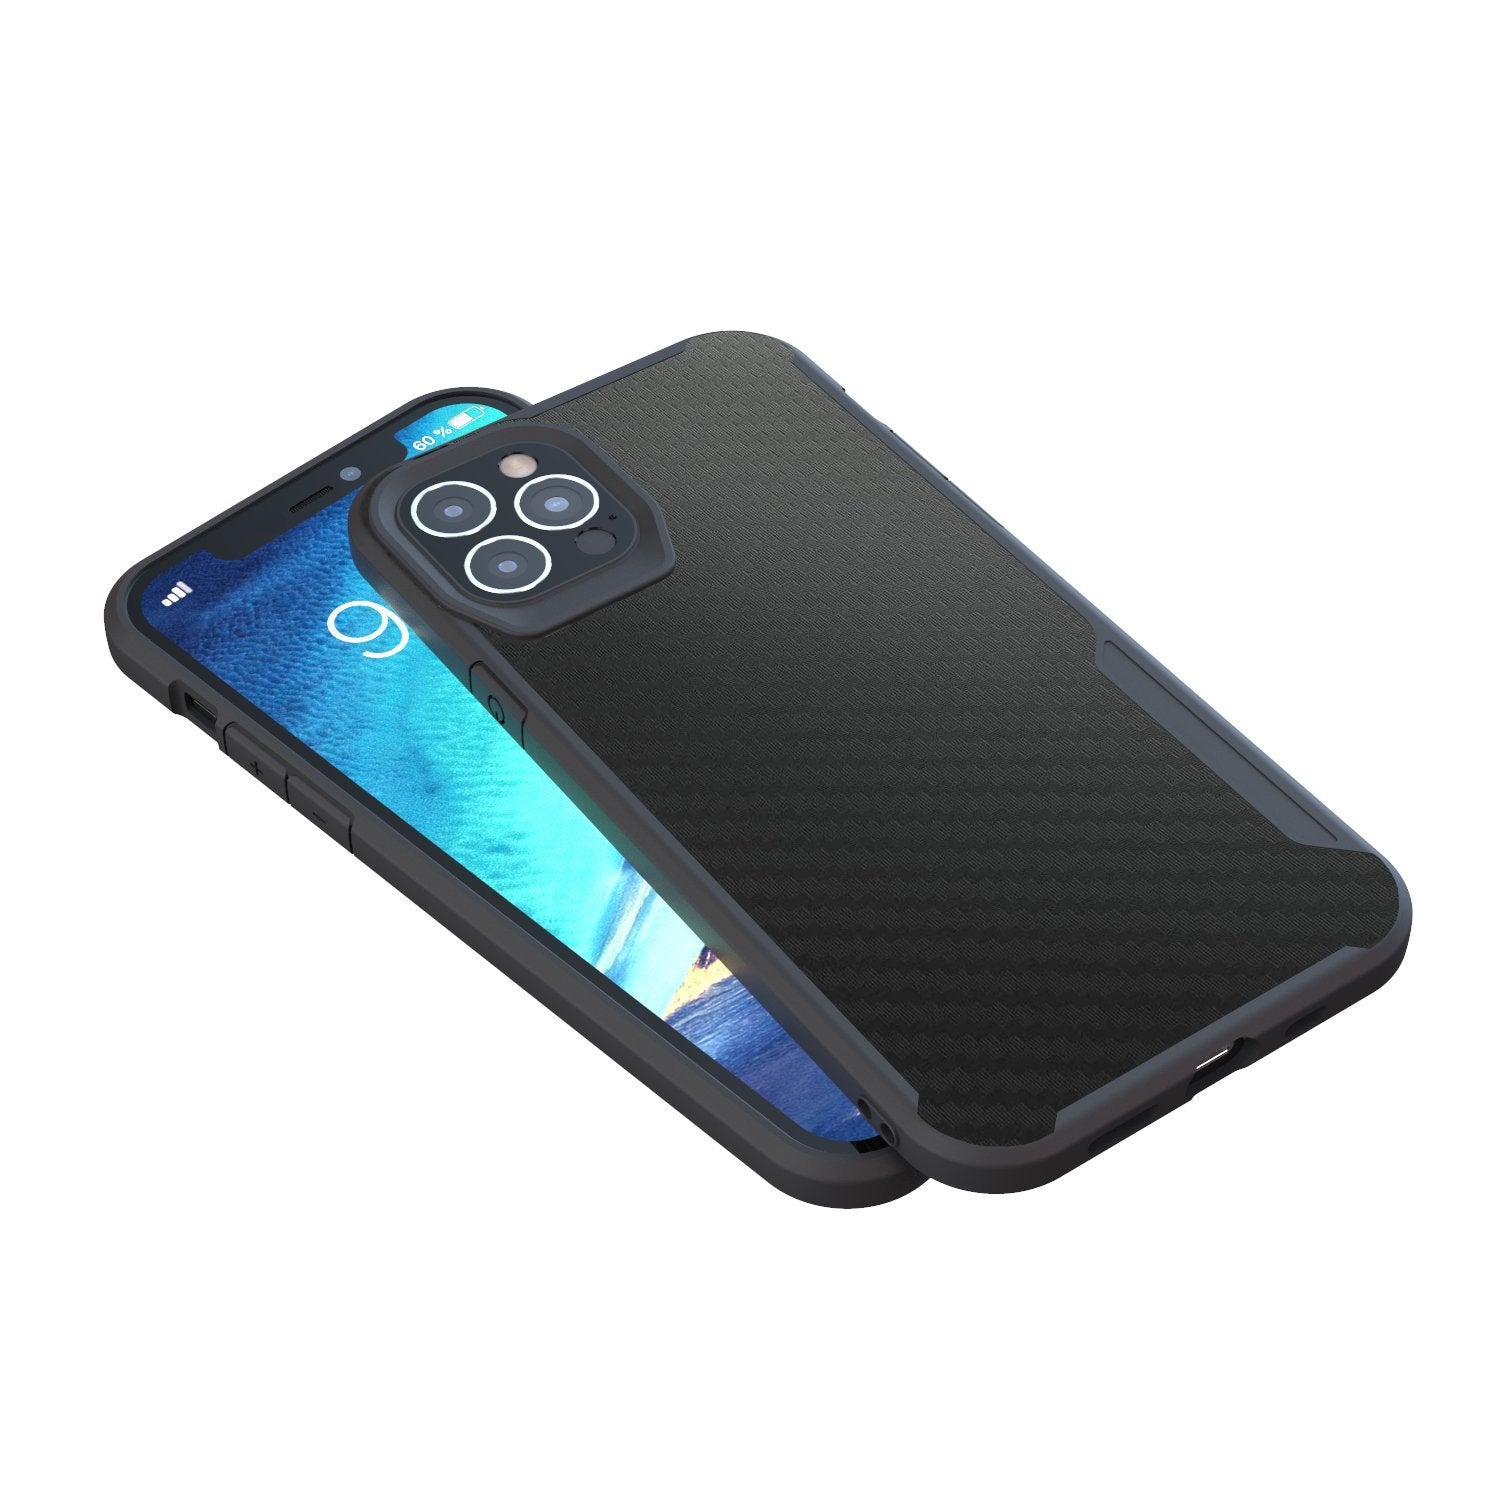 iPhone 12 Pro Max Kitoo Carbon Fiber Pattern Case Black